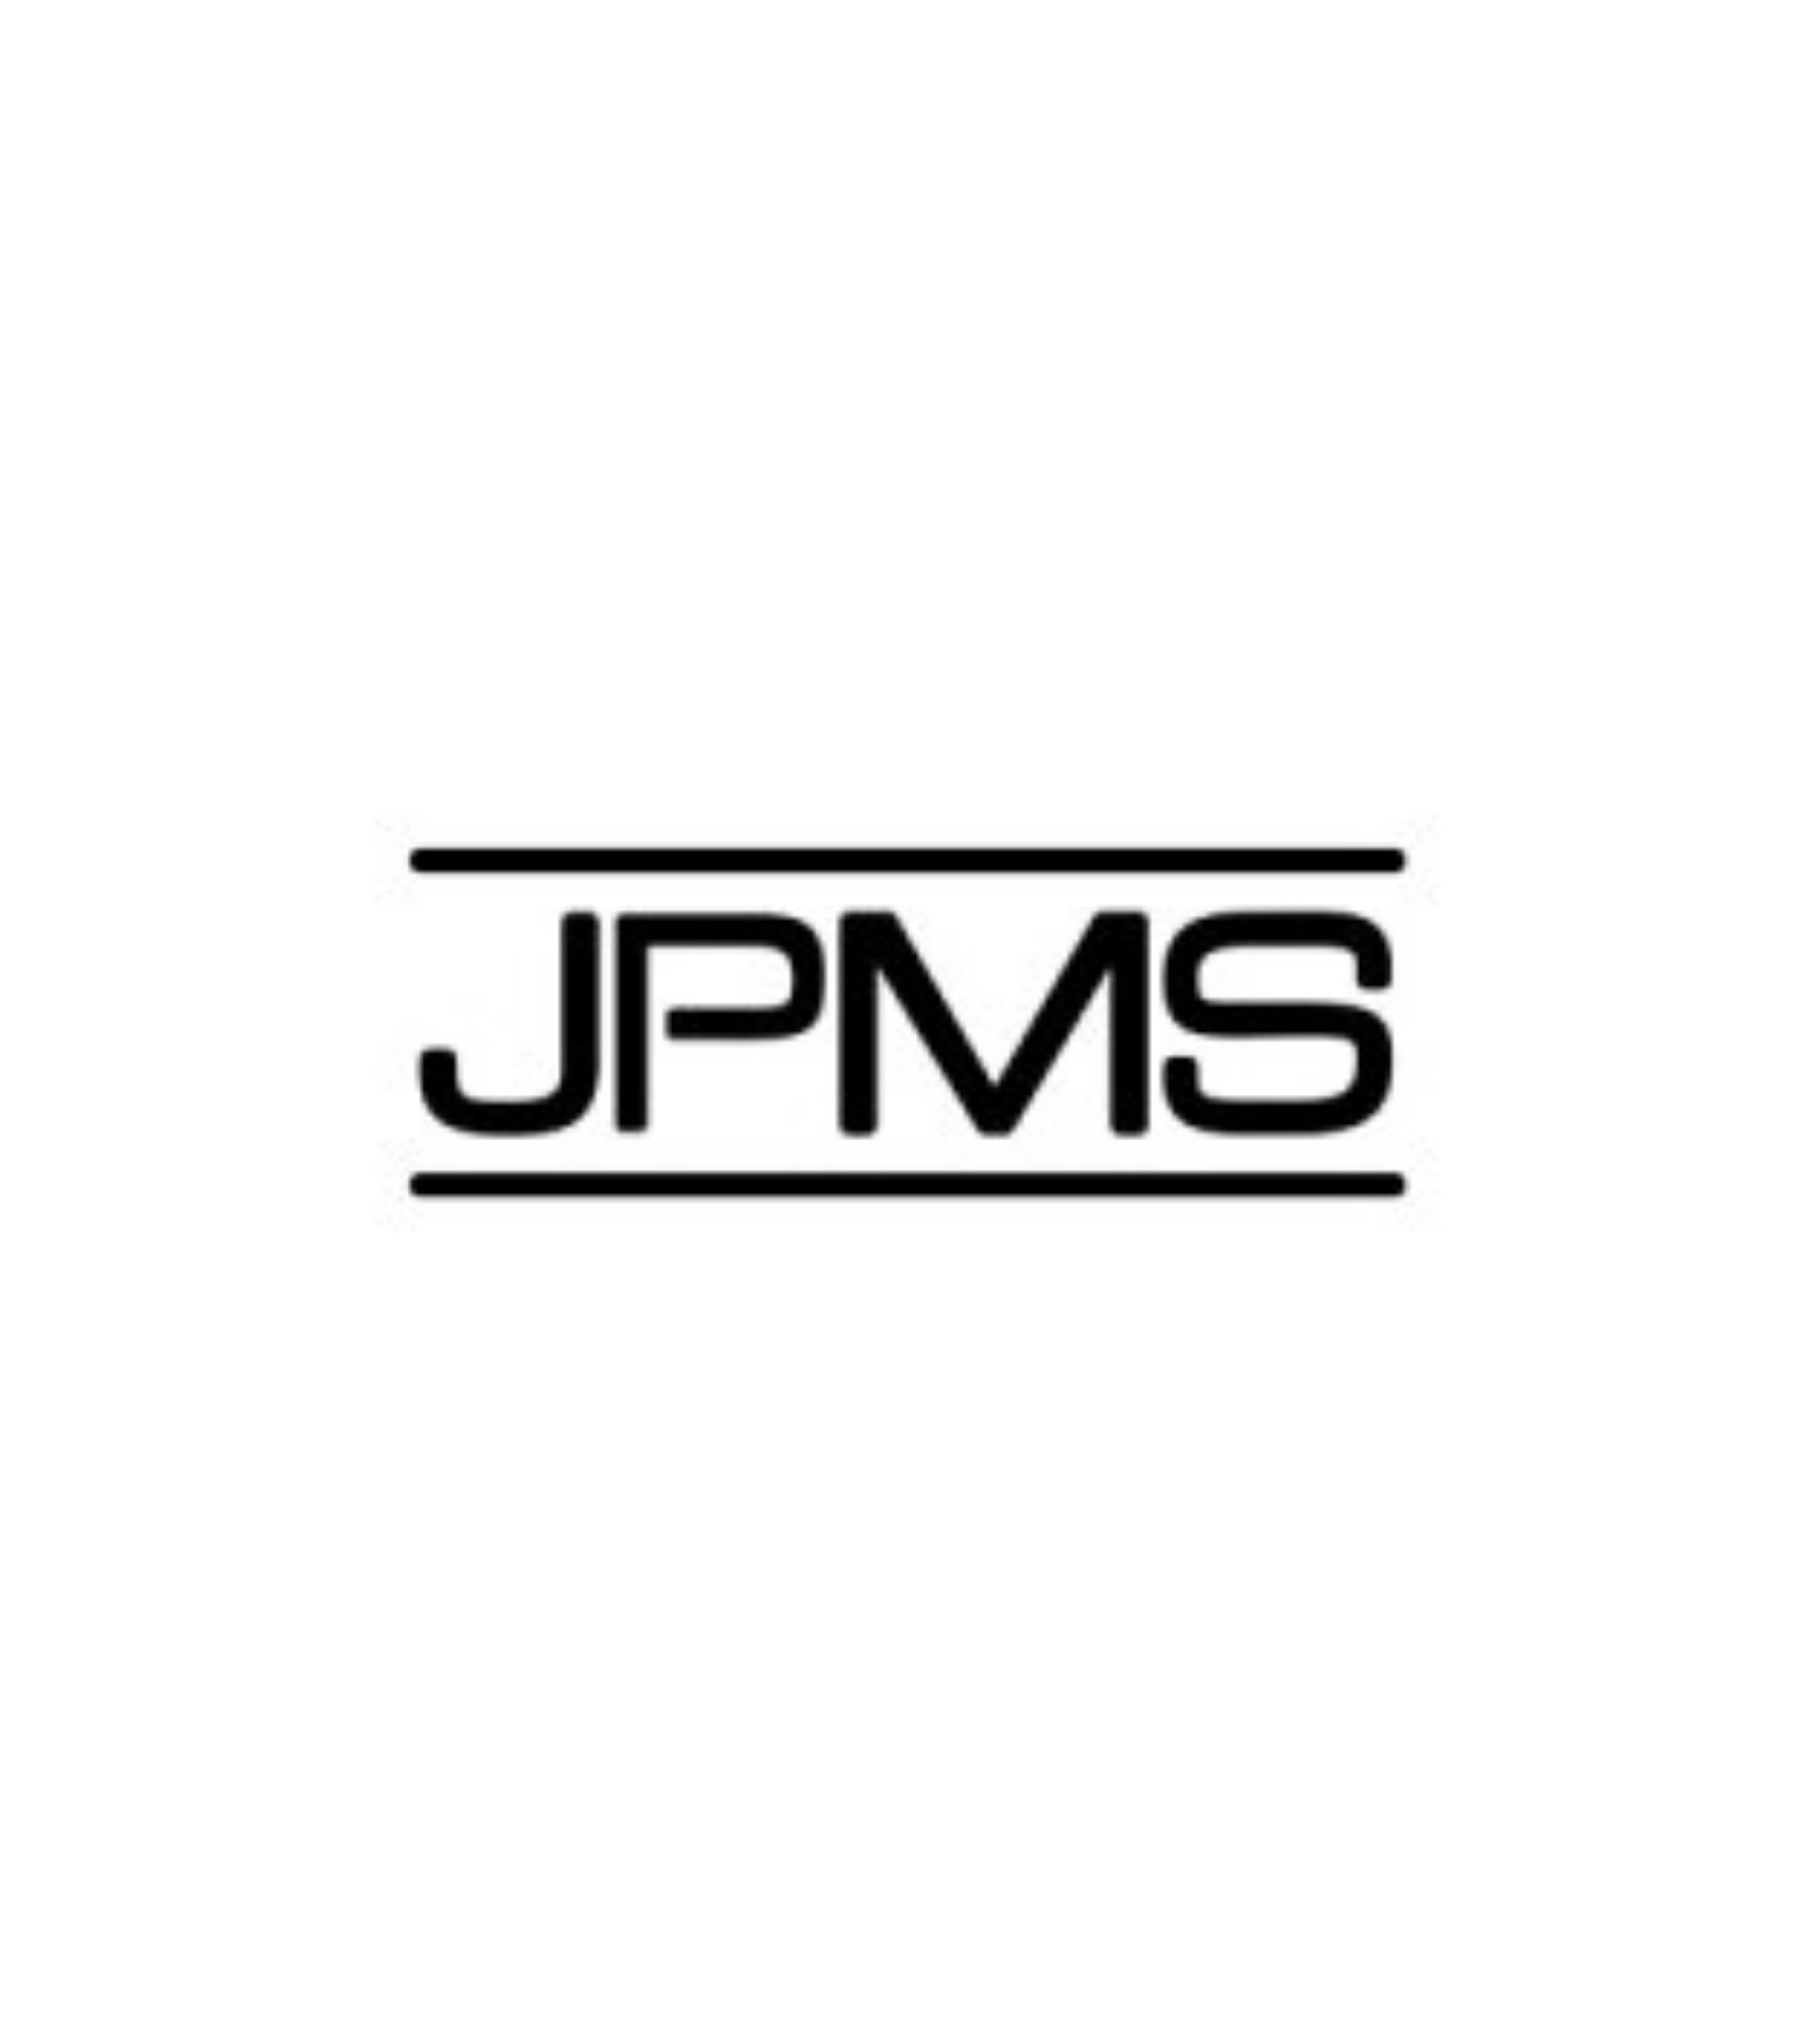 JPMS logo